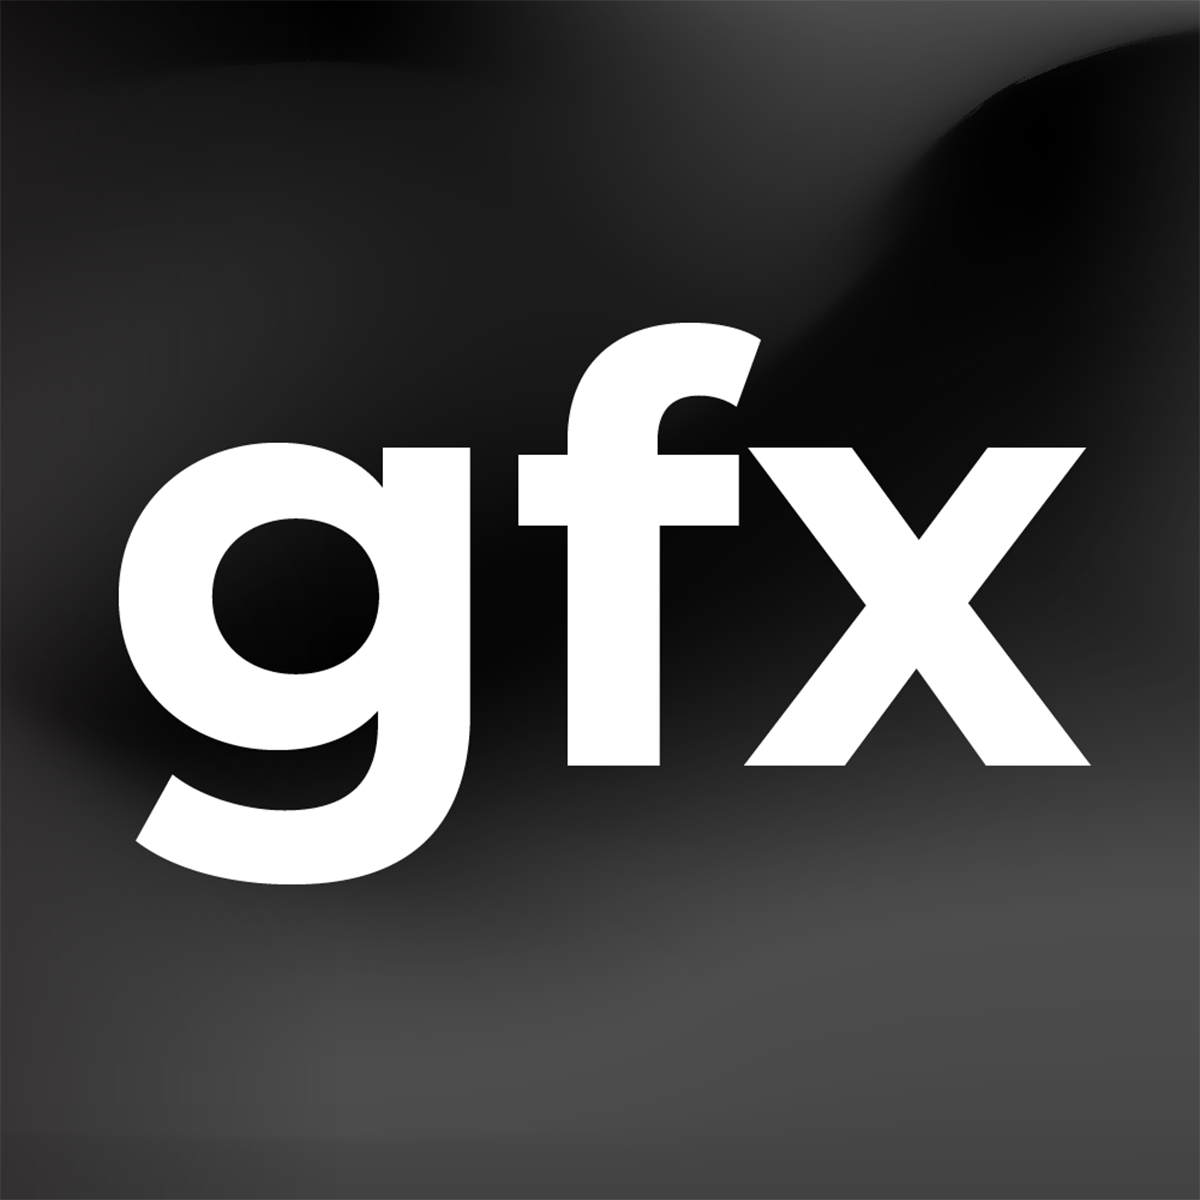 gfx for Shopify